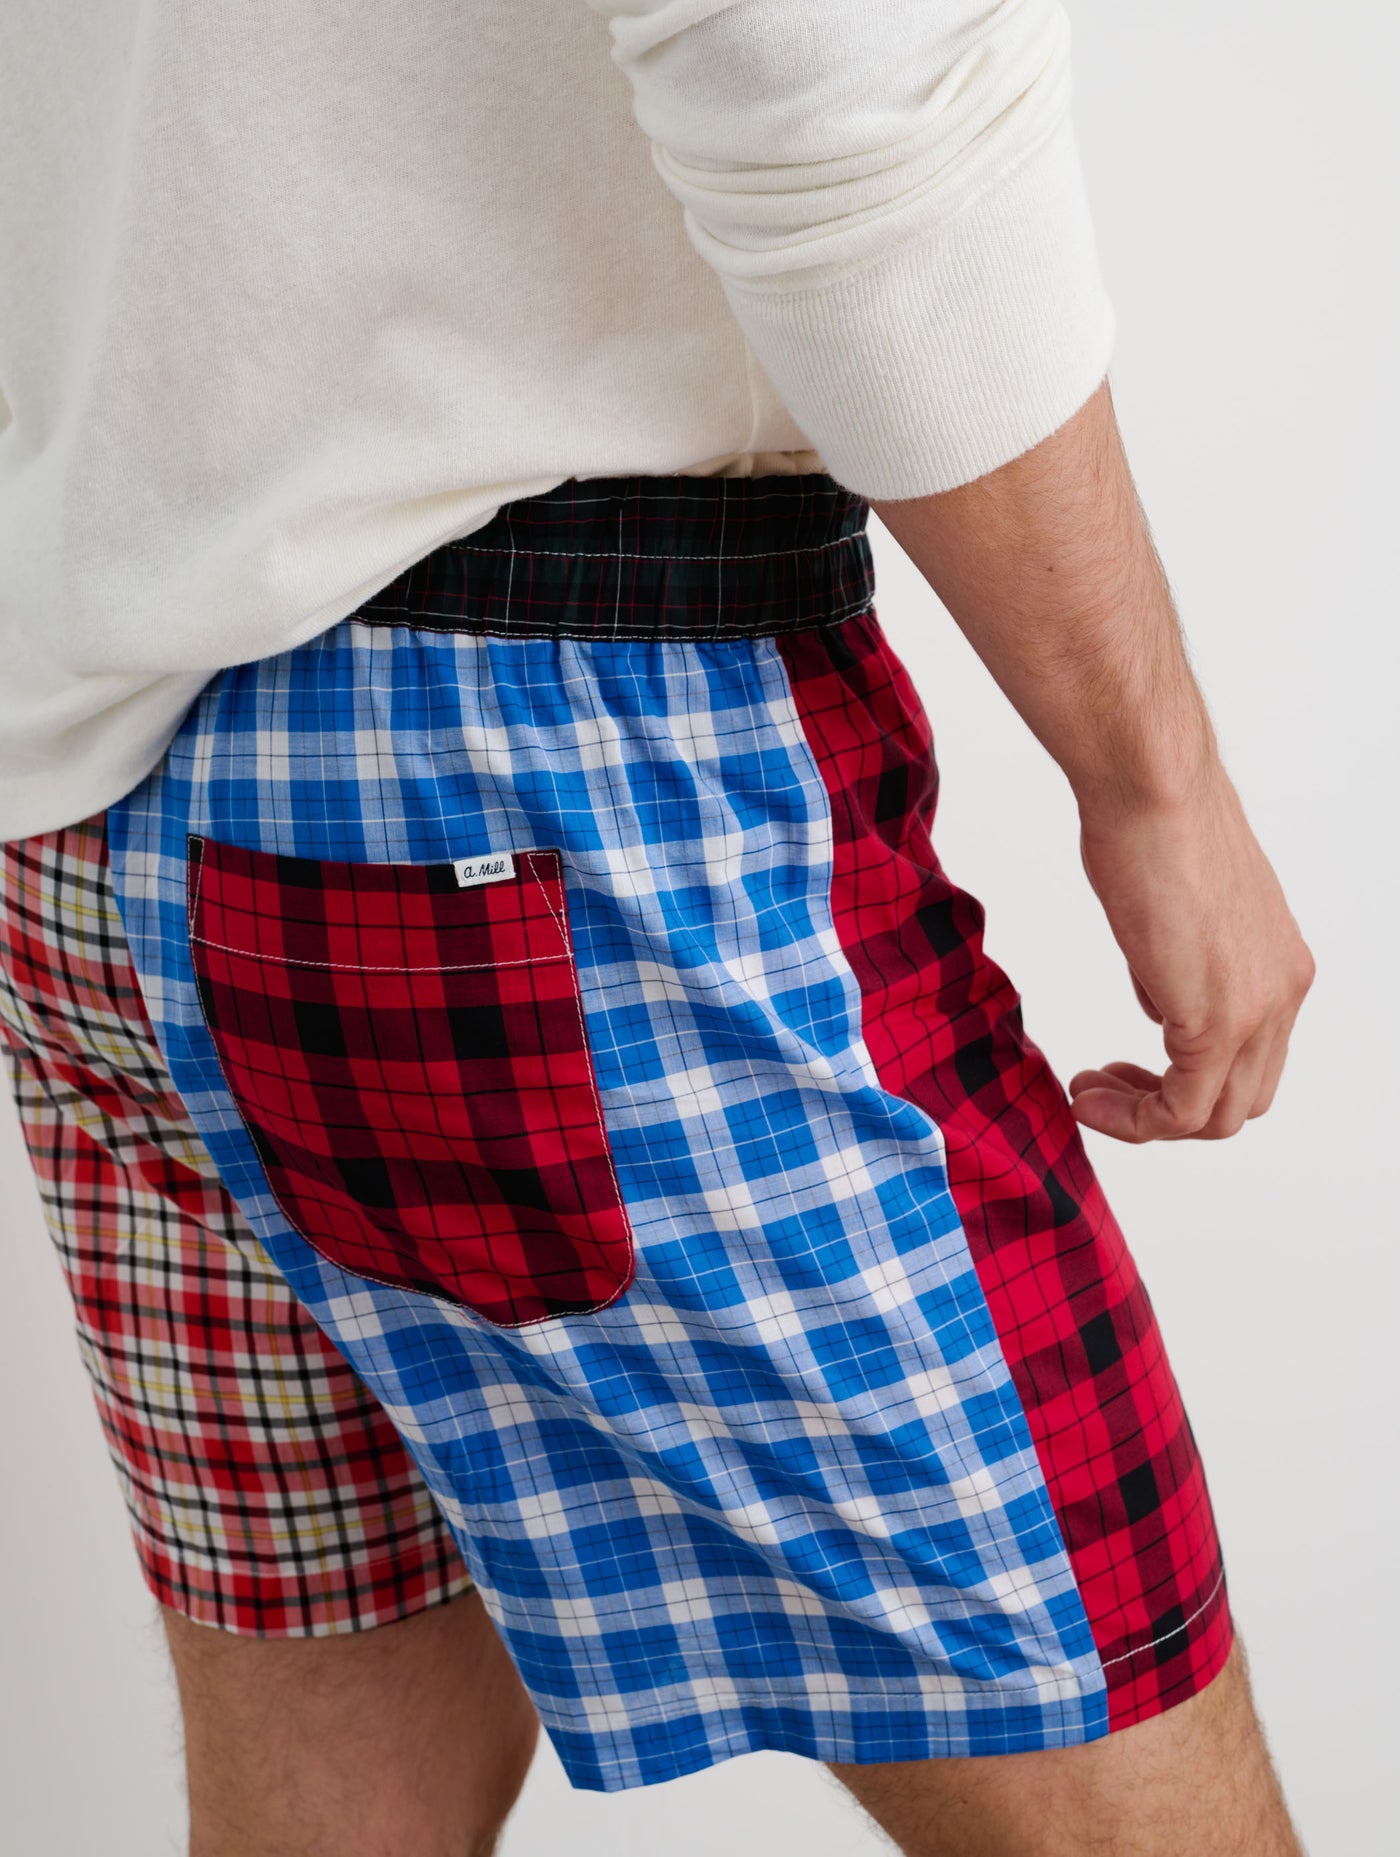 Pajama Shorts in Mixed Tartan